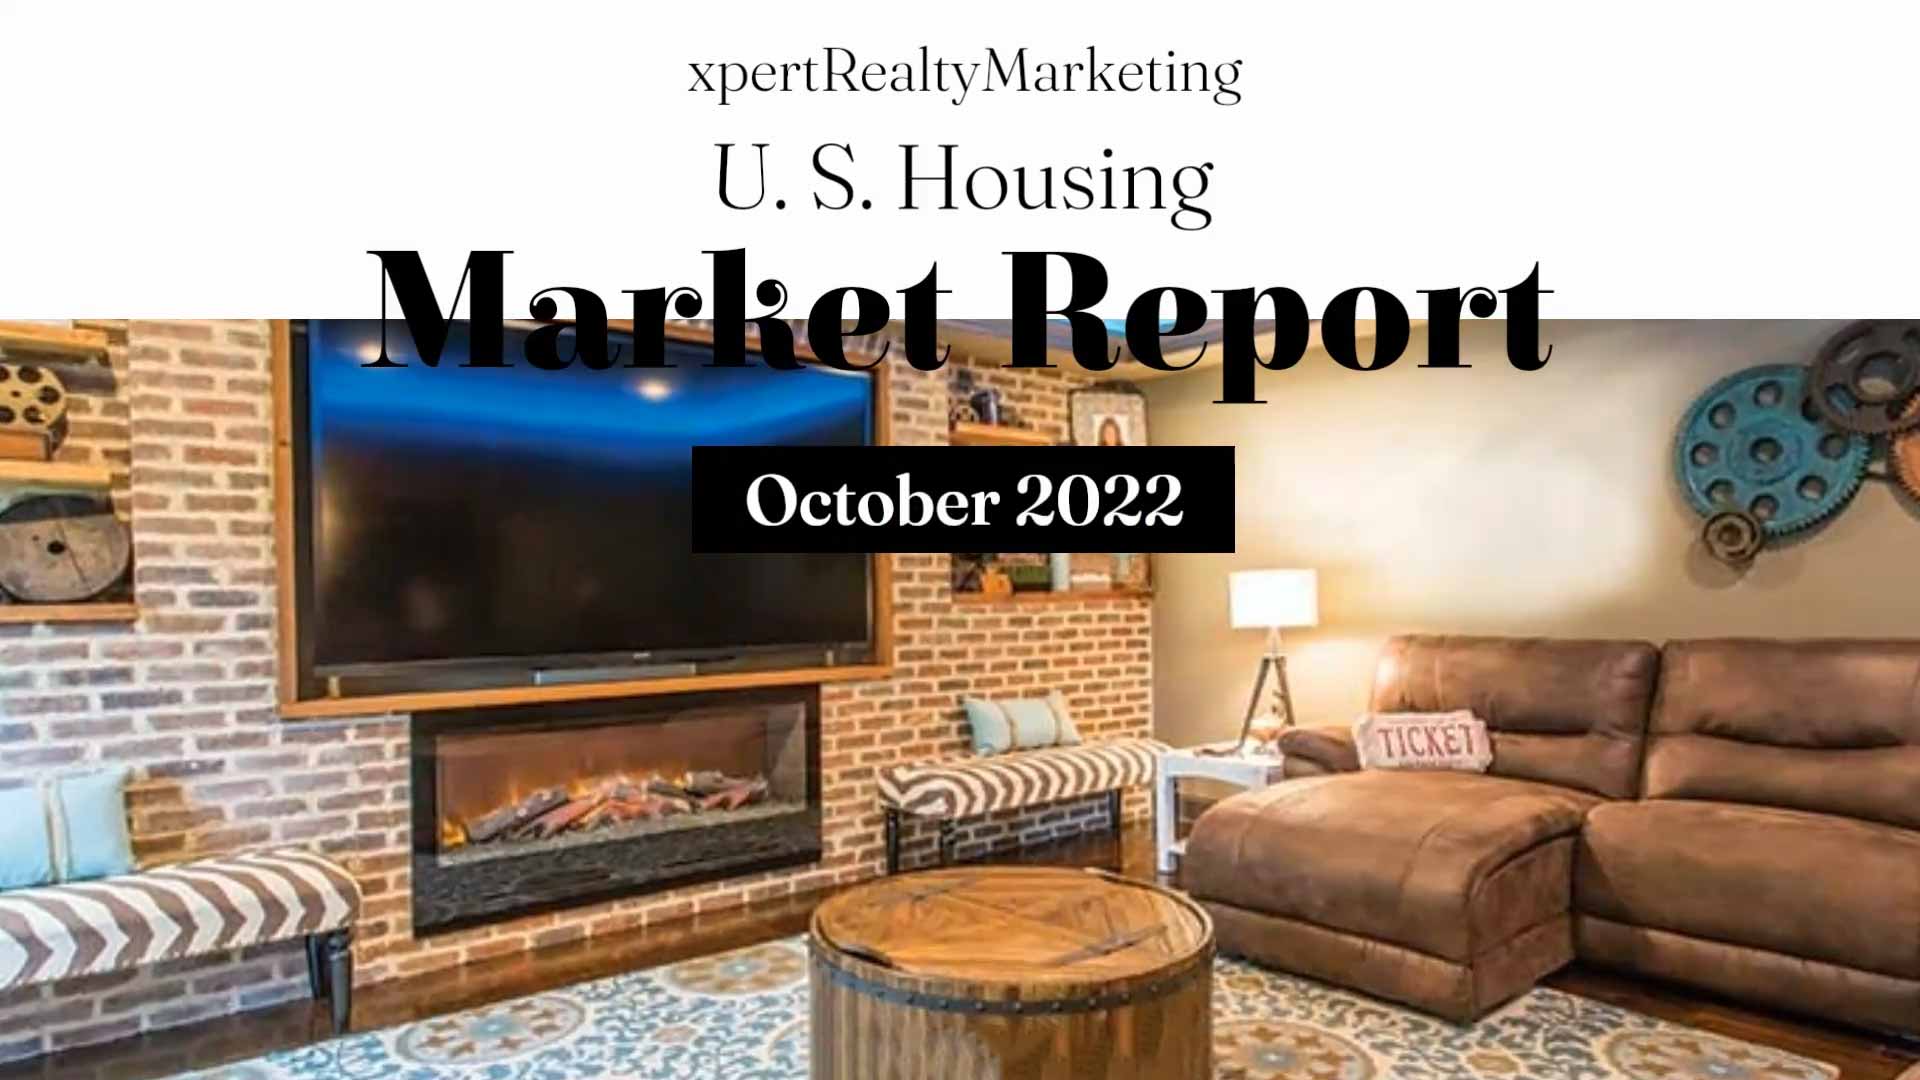 U.S. Housing Market Report for October 2022